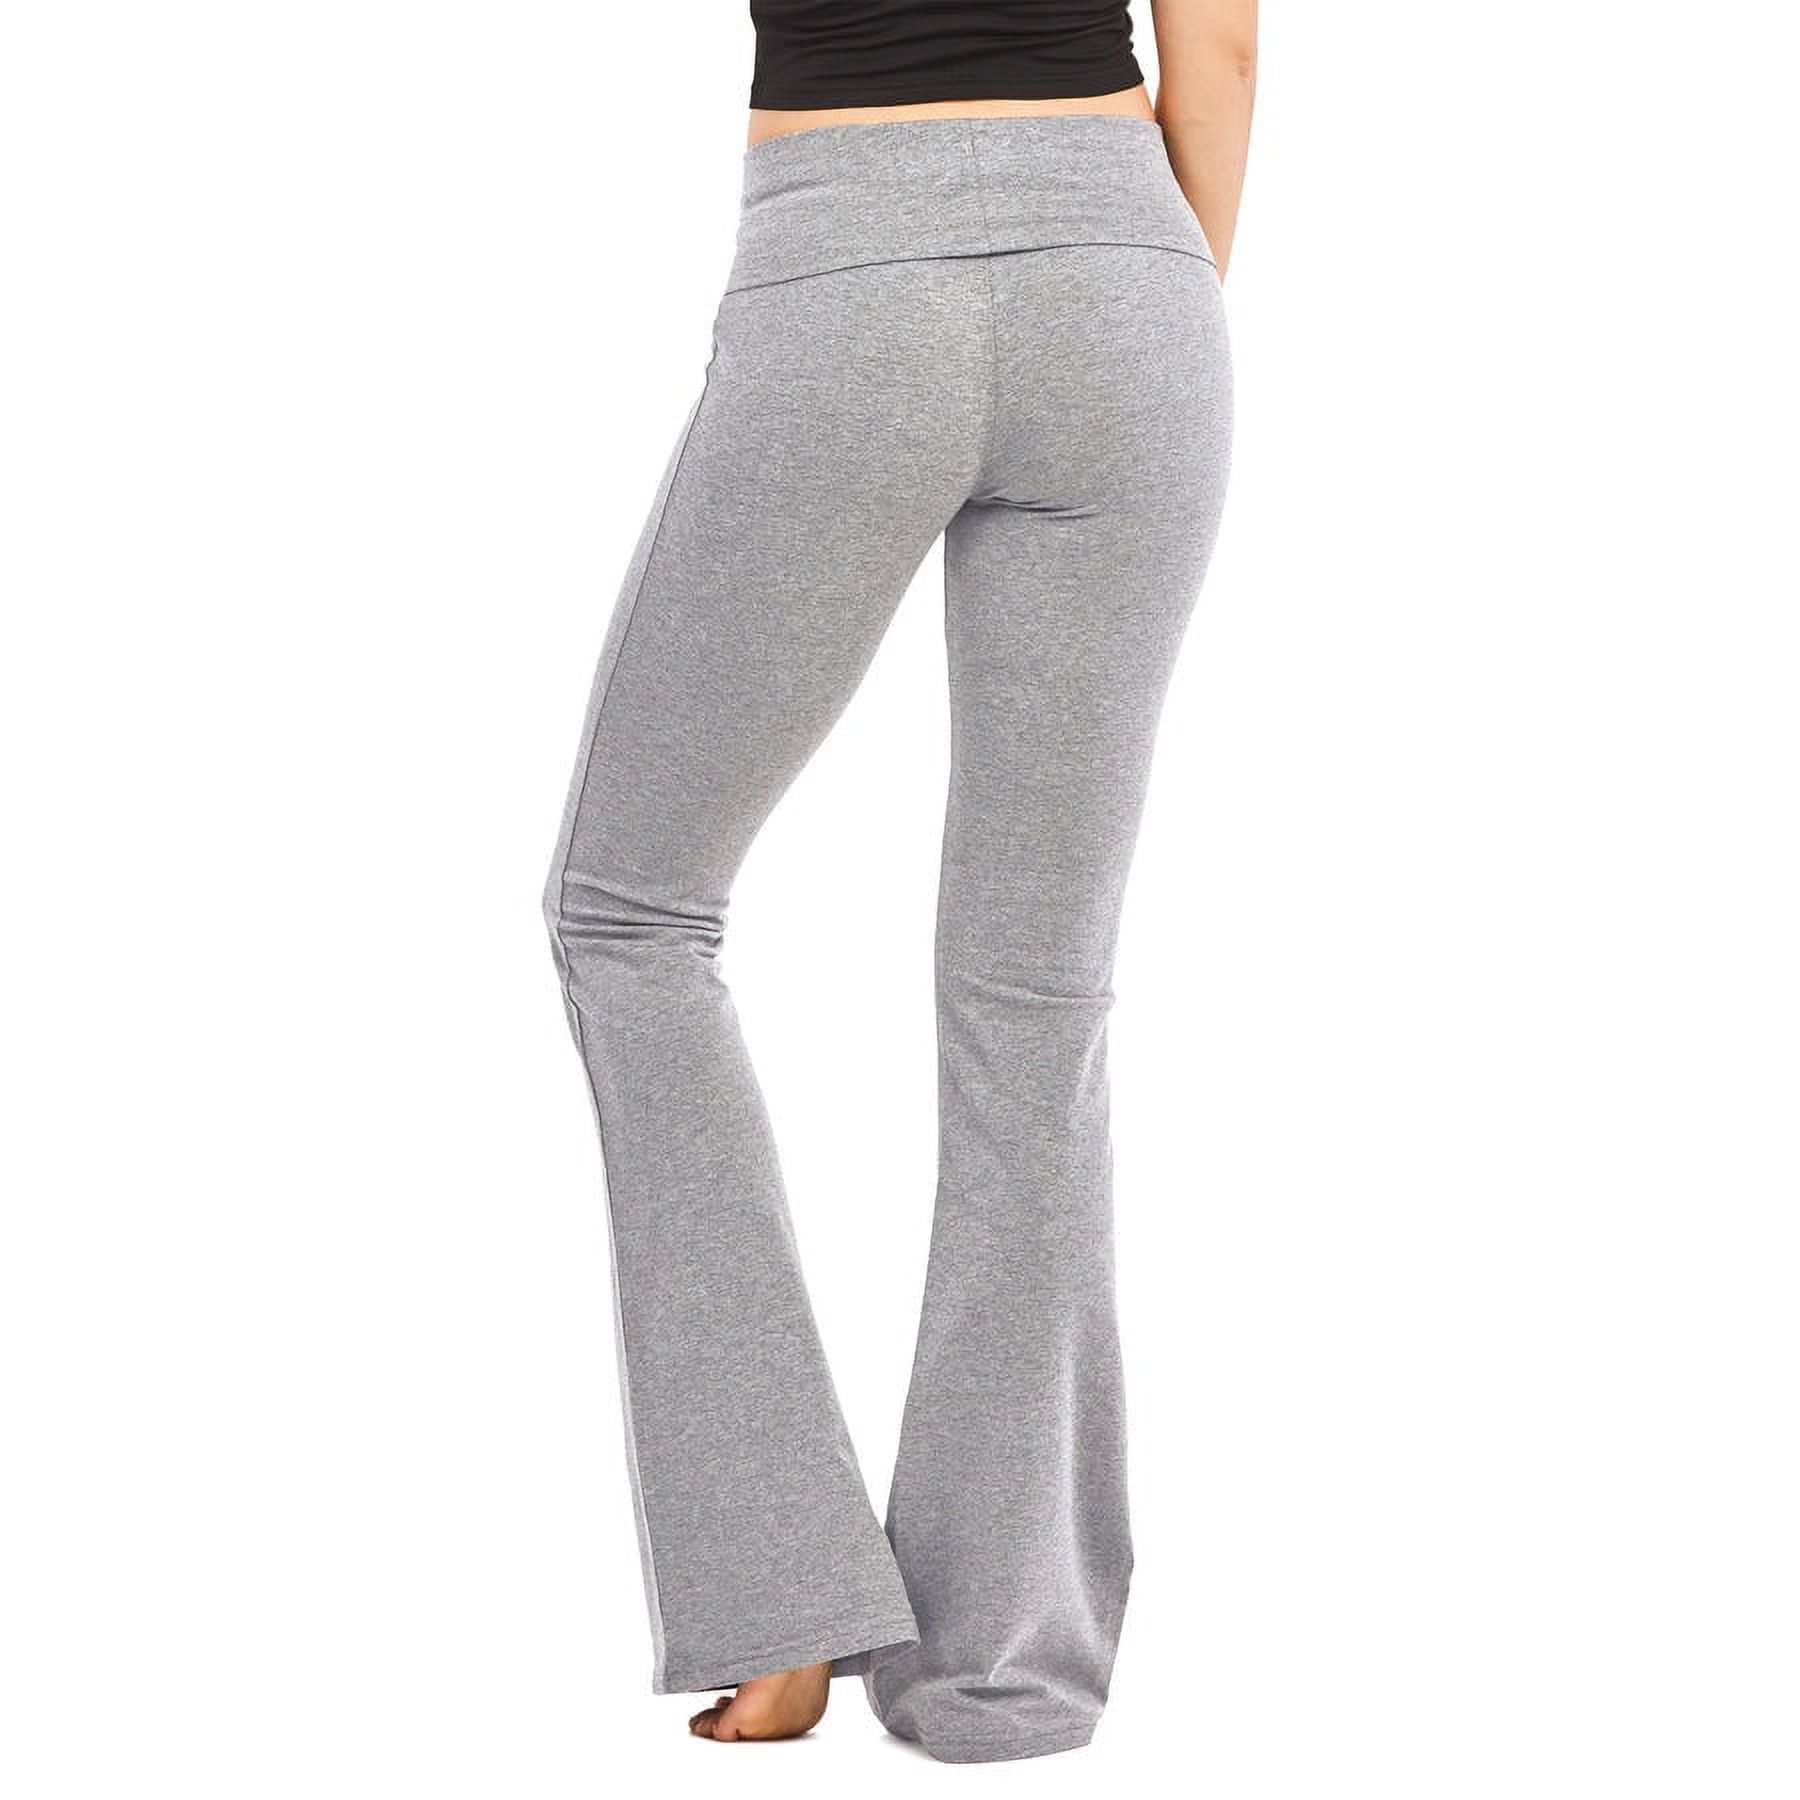 TheLovely Women's Fold-Over Waistband Bootleg Flared Bottom Workout Yoga Pants Leggings - image 3 of 3